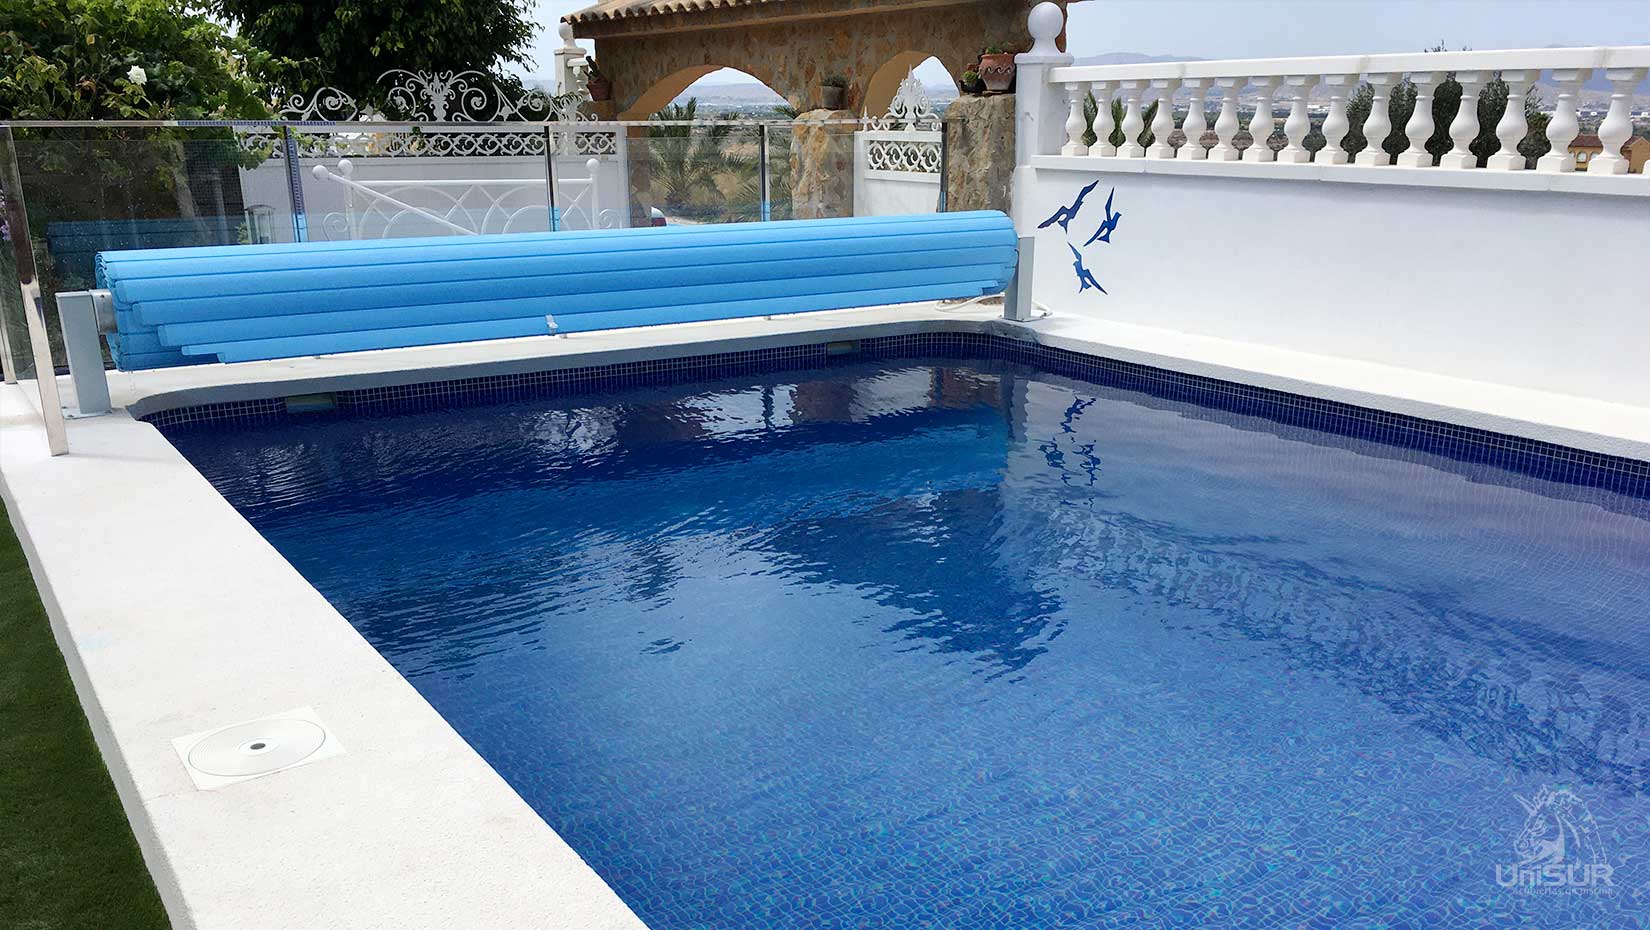 UniSUR-cubierta-piscina-persiana-lamas-Alicante